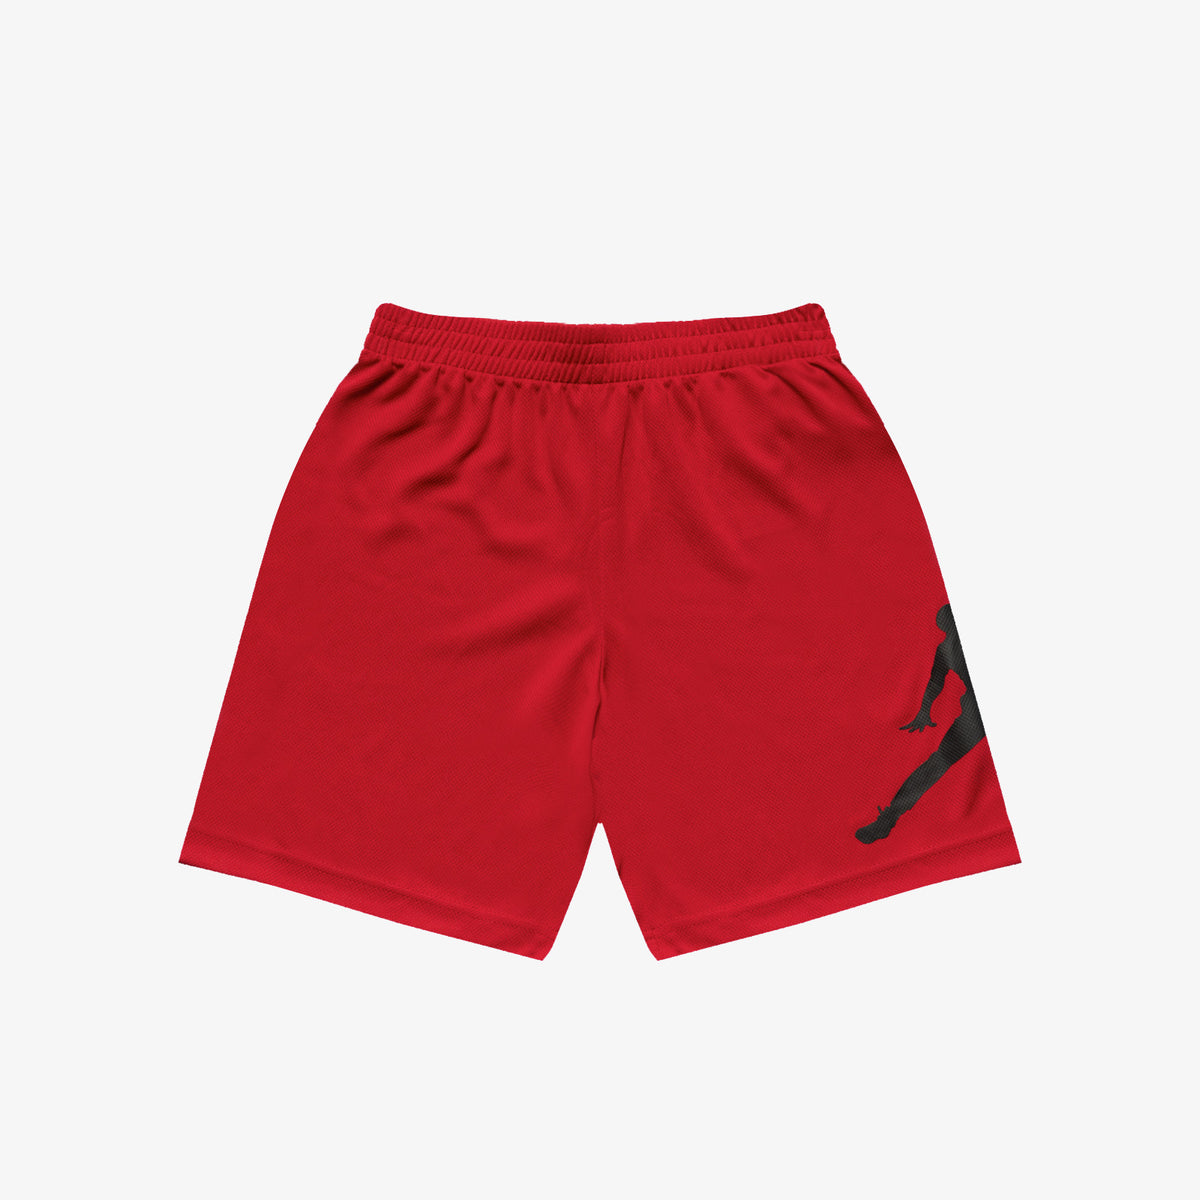 Jumpman Wrap Mesh Shorts - Red